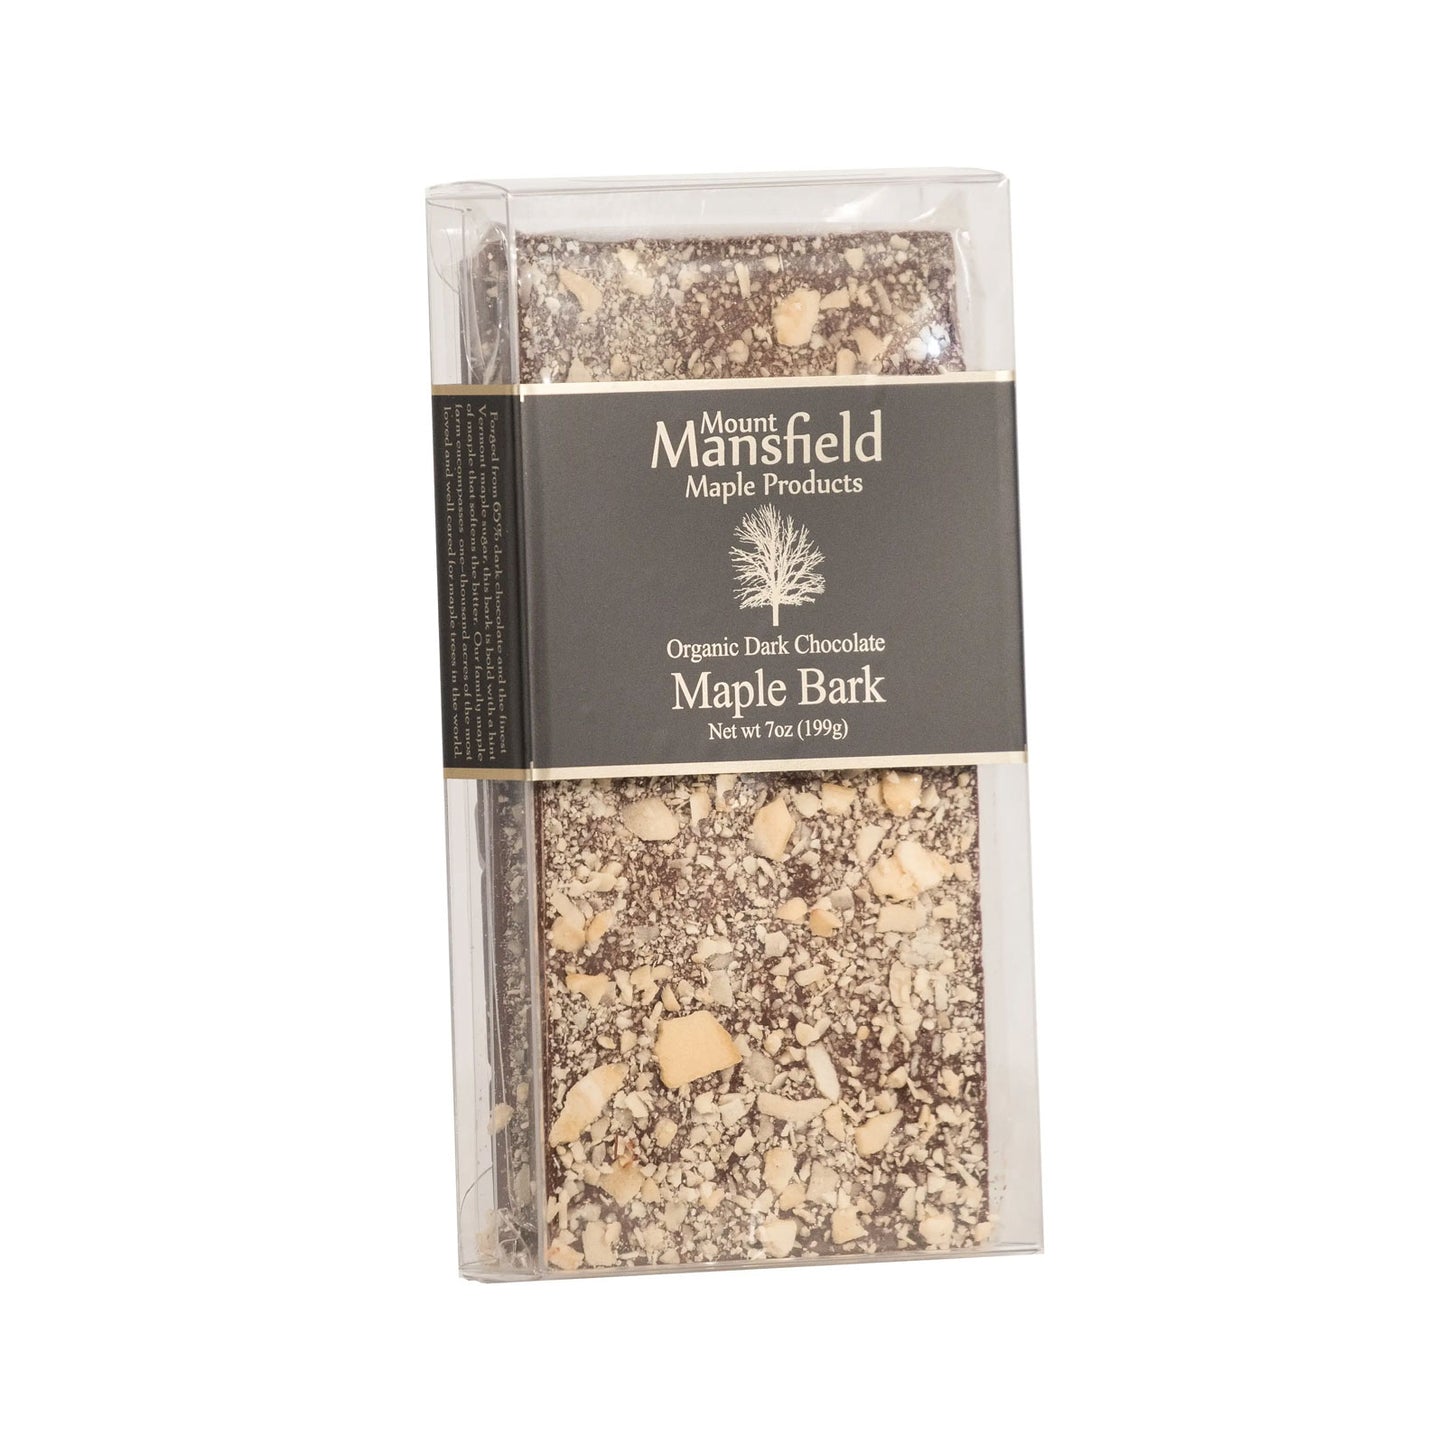 Organic Dark Chocolate Maple Bark, 7oz.